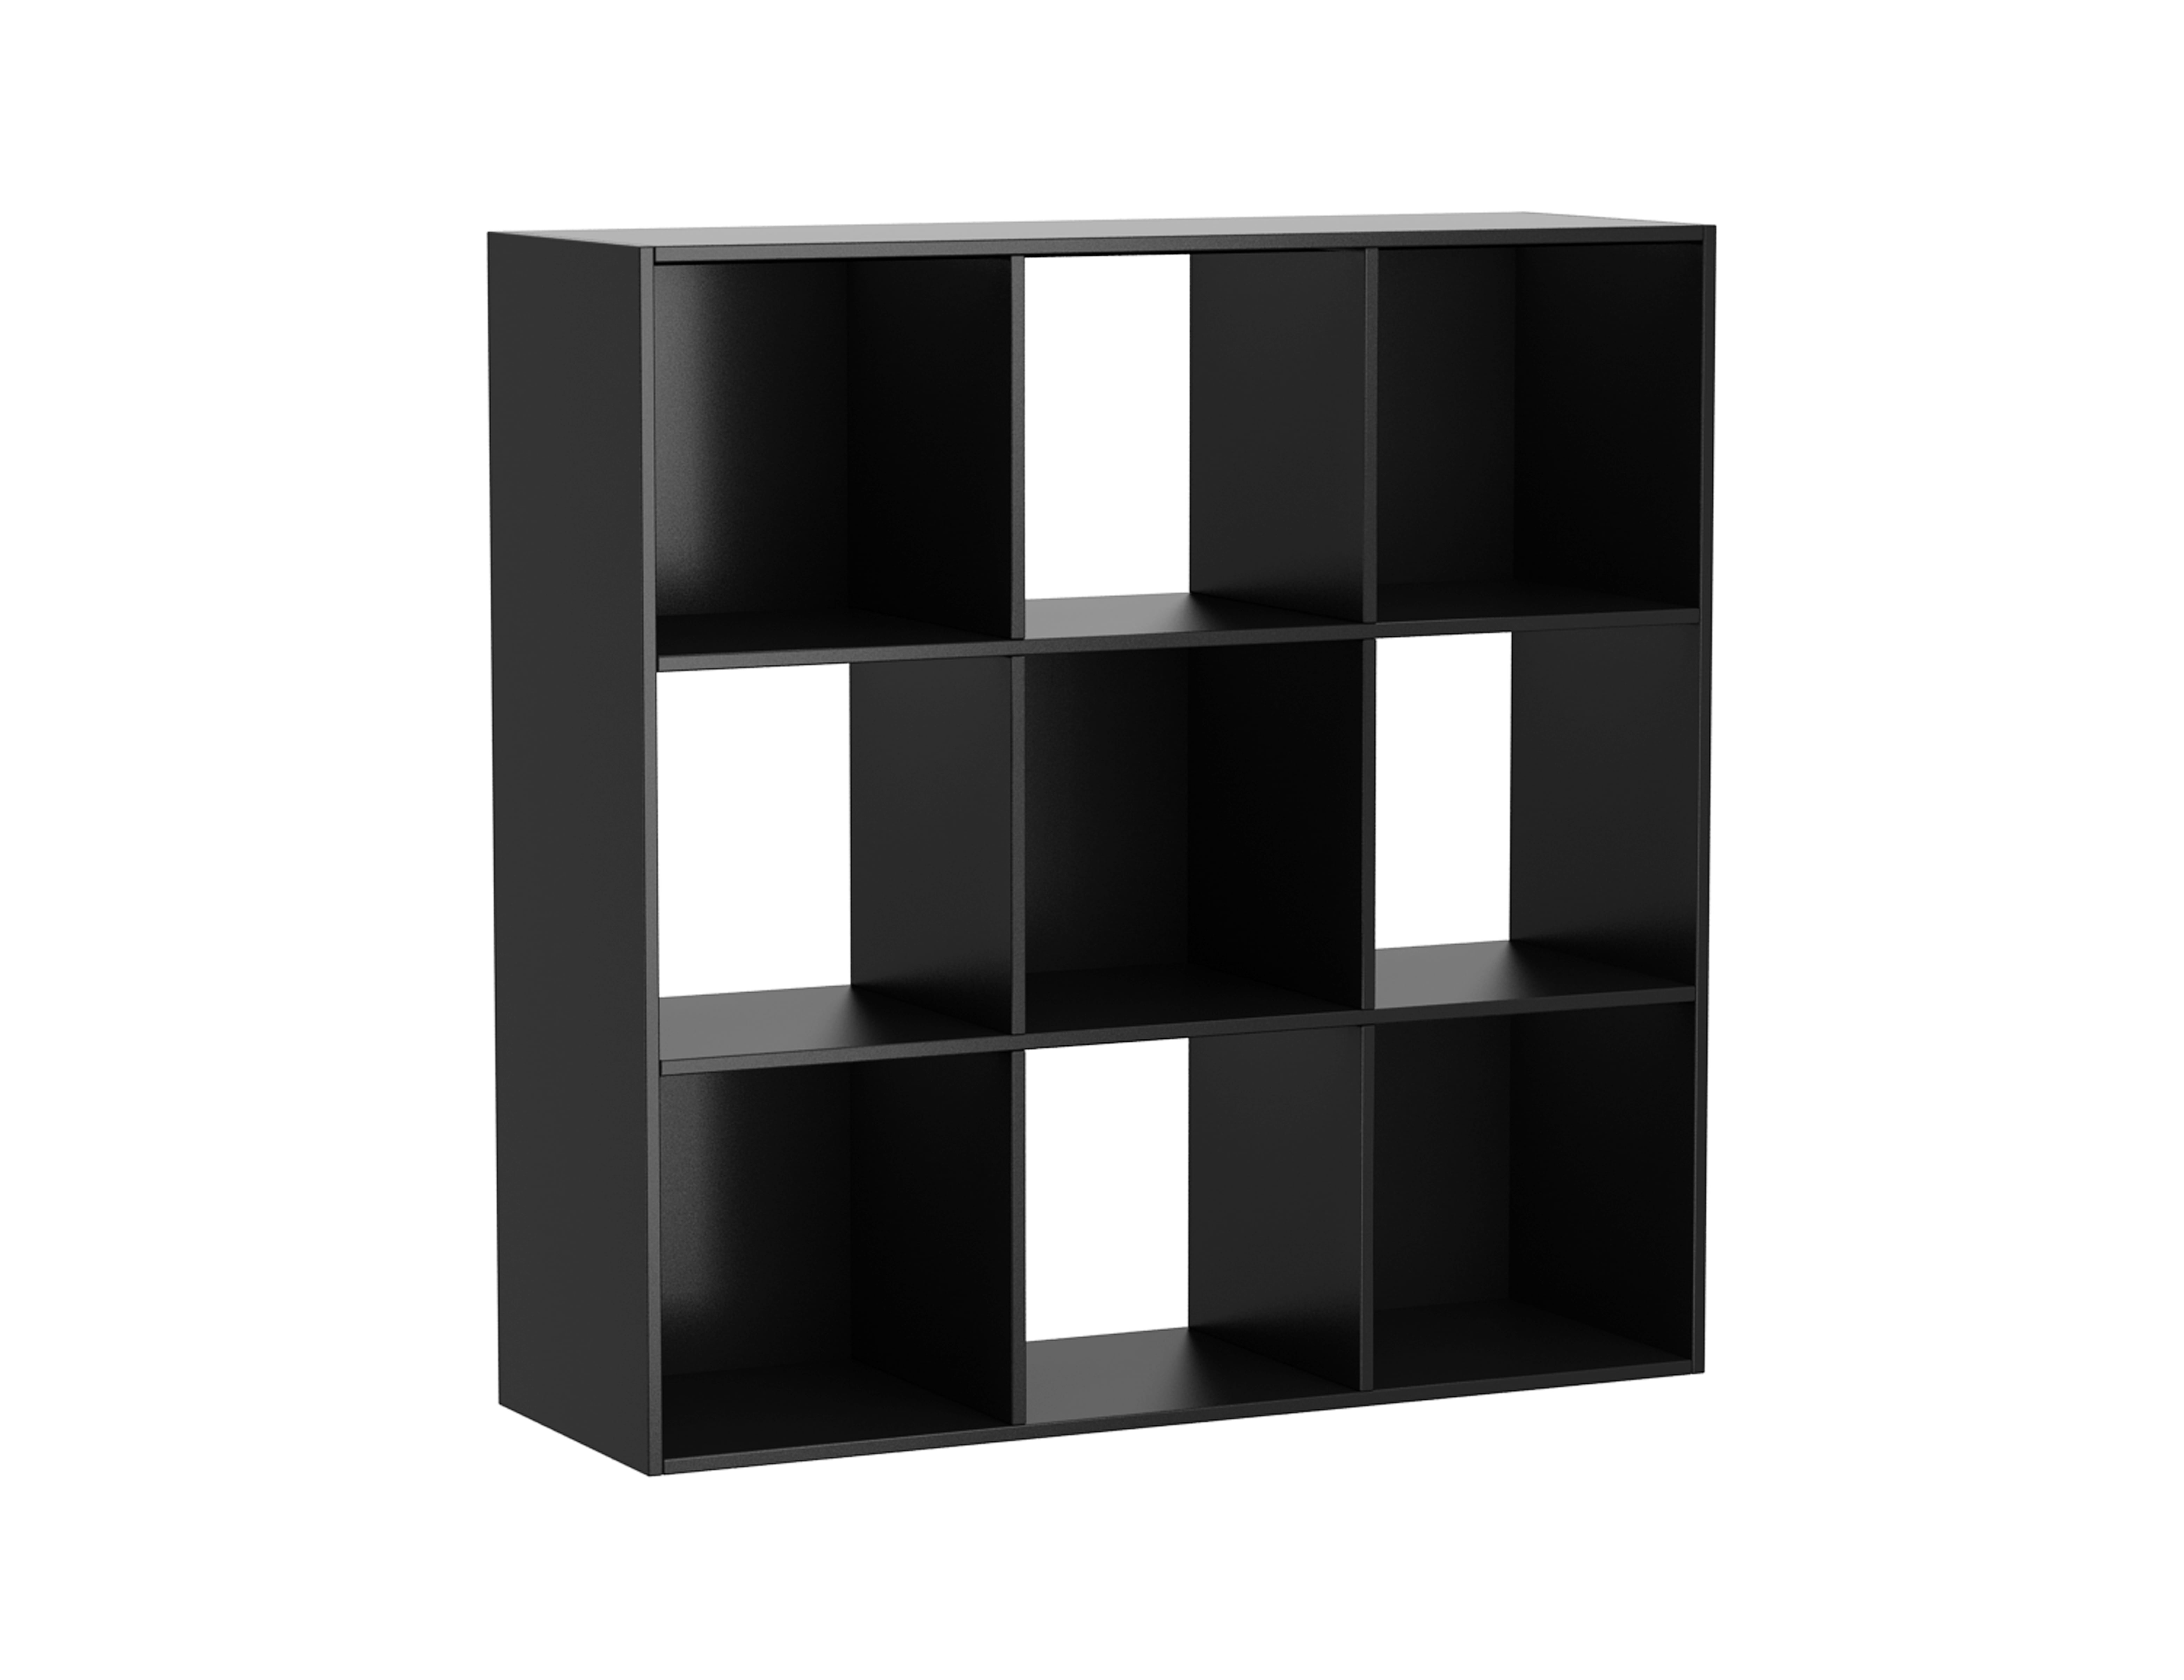 Mainstays 9 Cube Storage Organizer, Mainstays 8 Cube Shelving Storage Unit